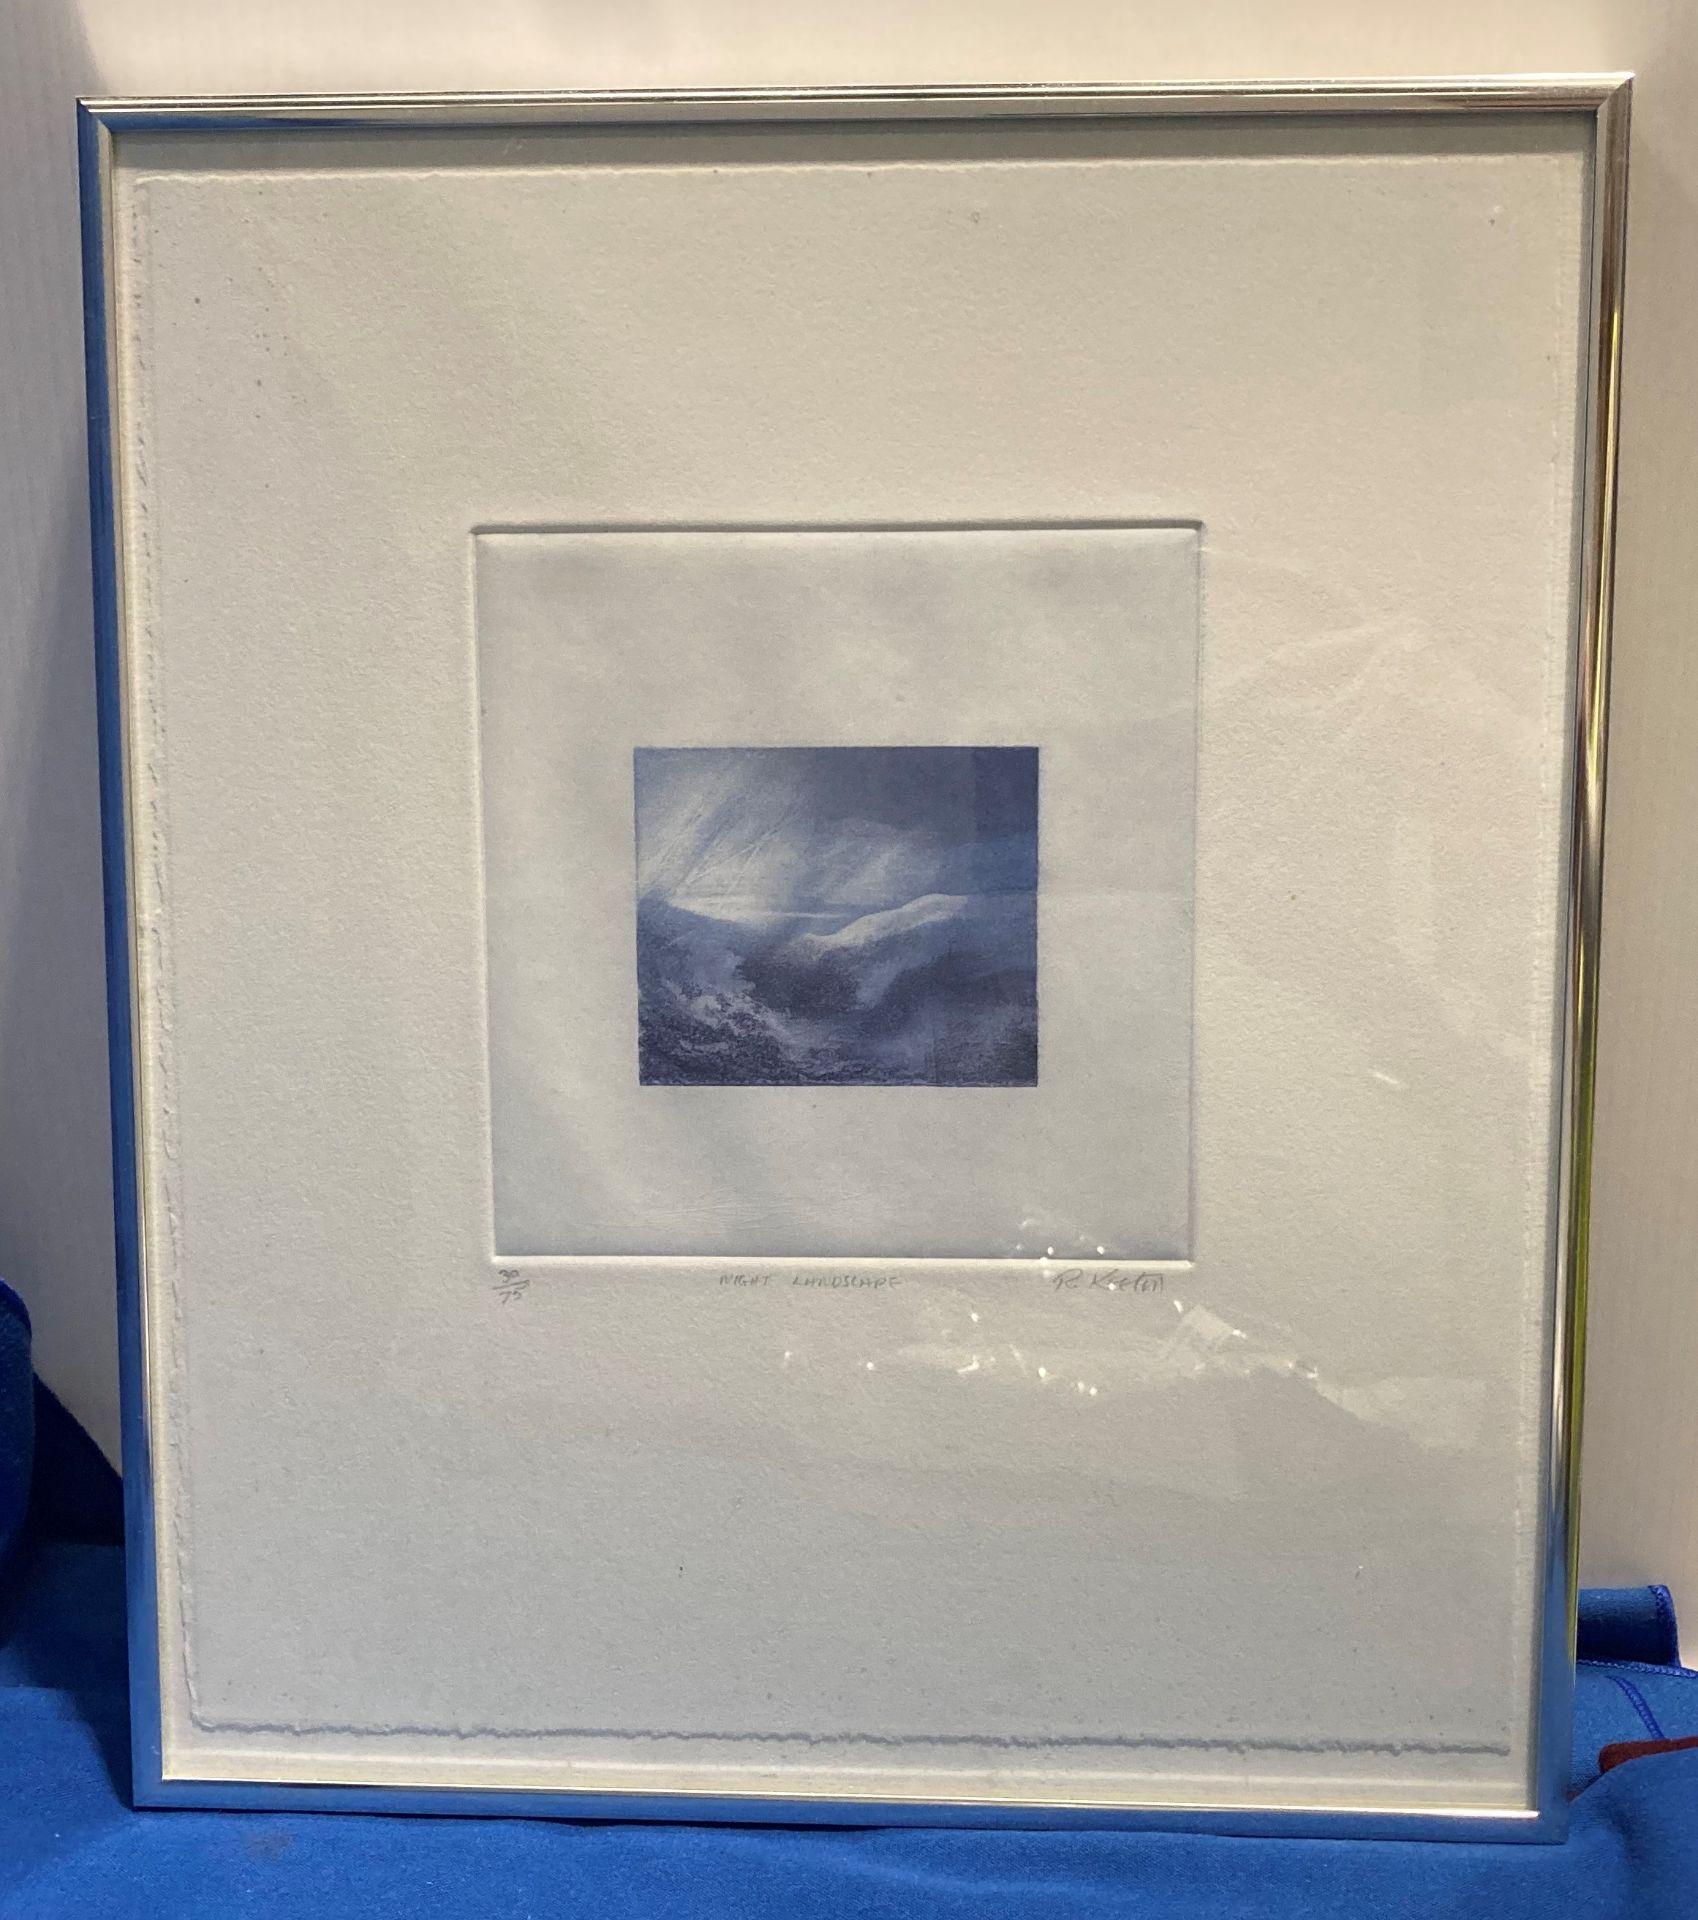 A framed, signed aquatint etching by Richard Keeton 'Night Landscape',